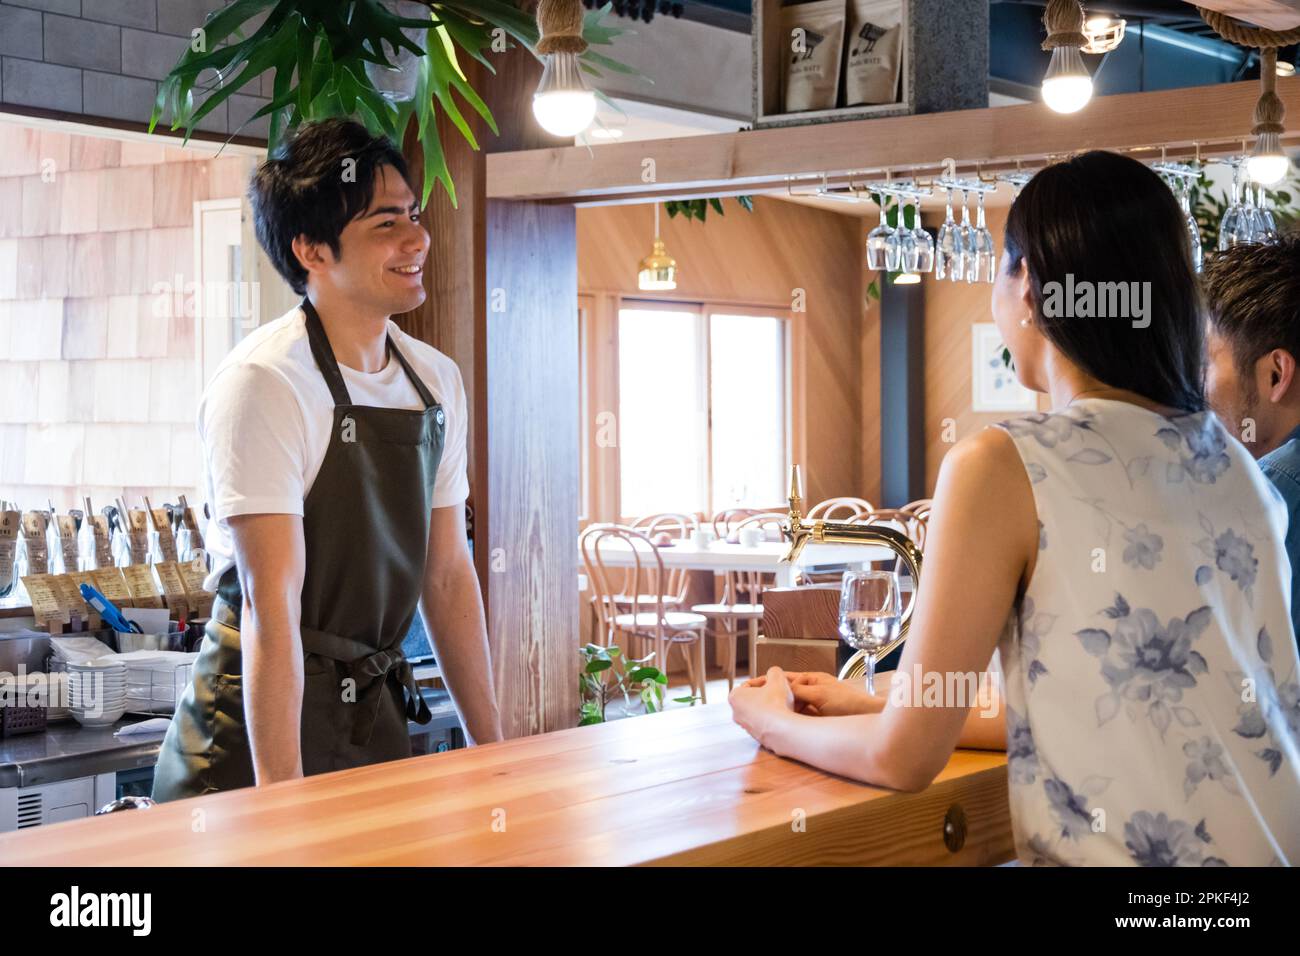 Cafe waitress and customer Stock Photo